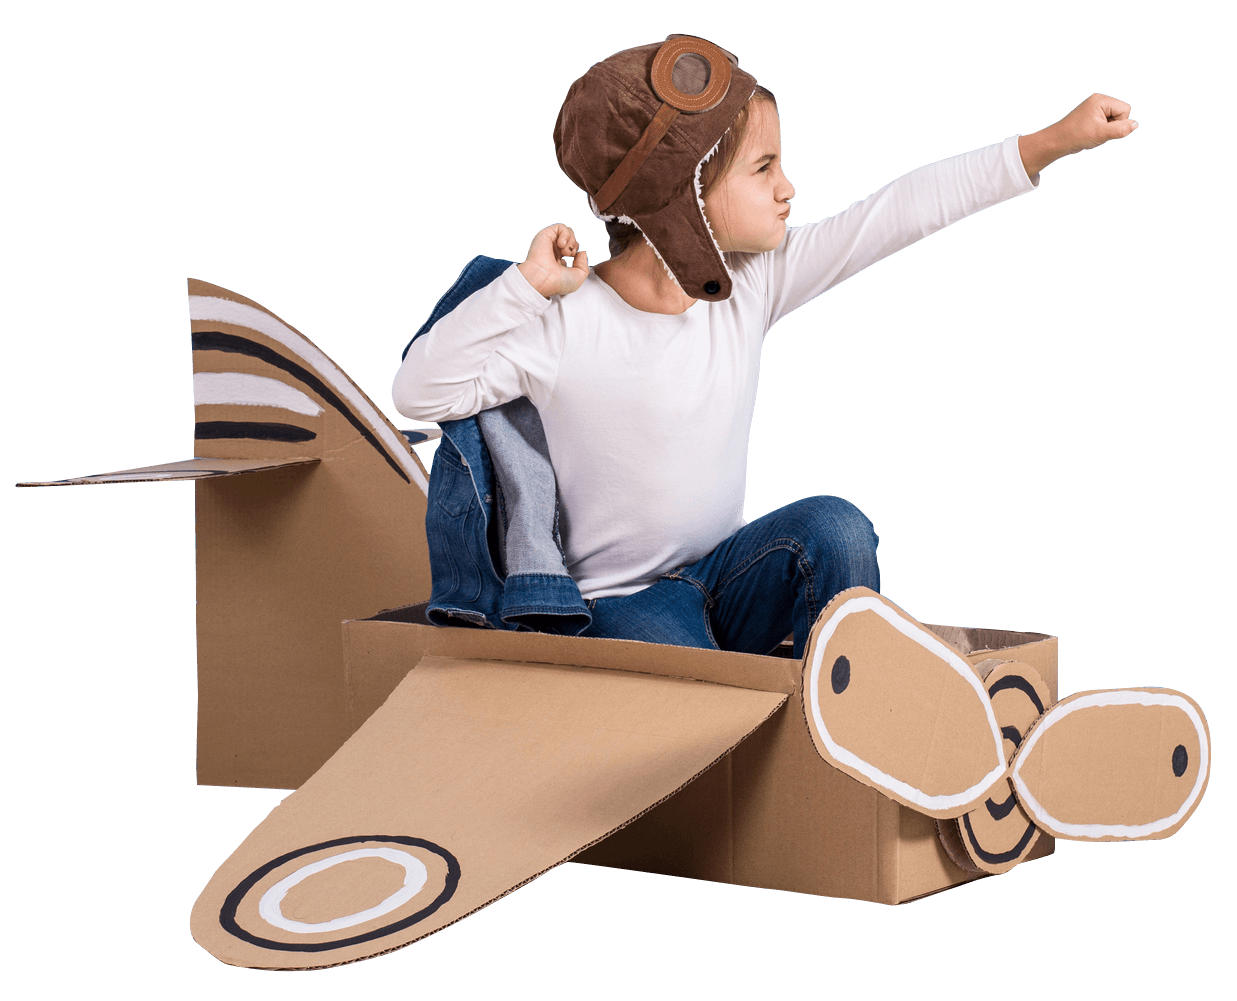 Creative Art — Child with Paper Plane in Edison, NJ